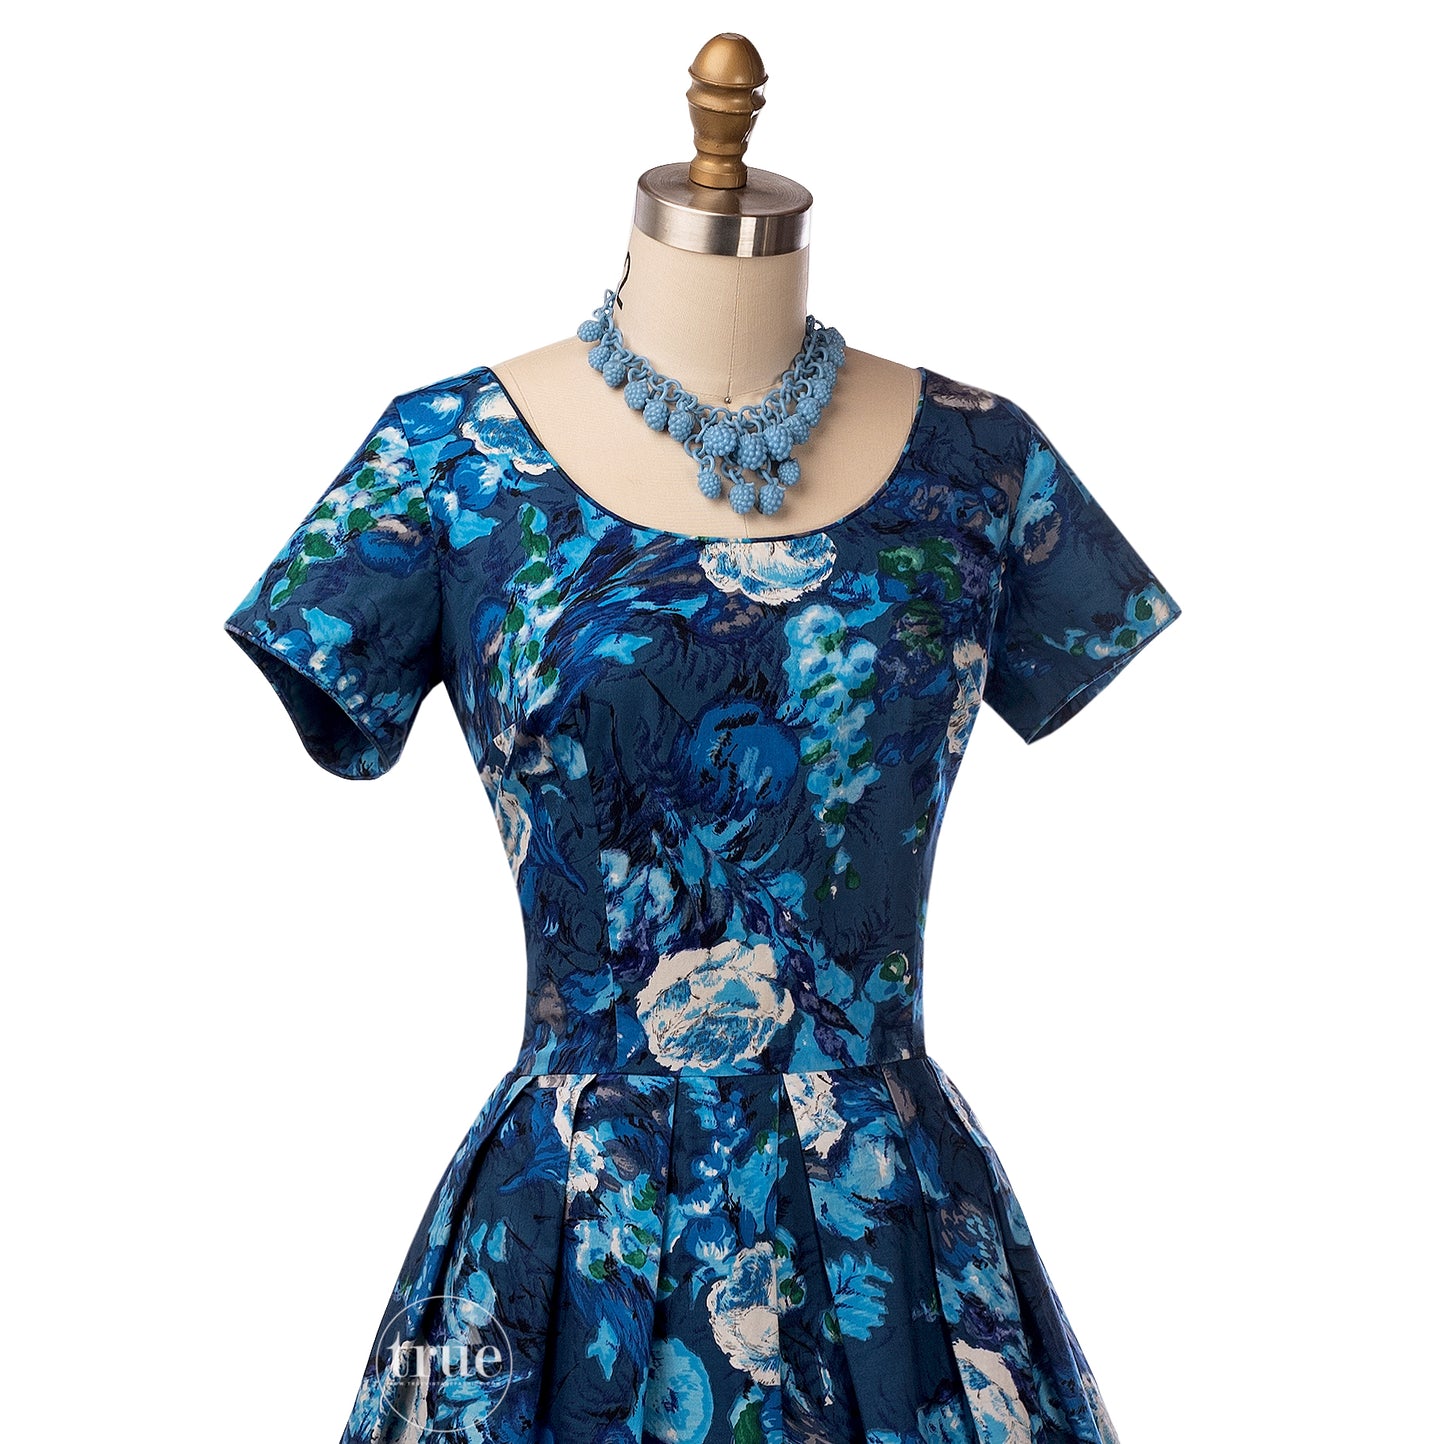 vintage 1950's dress ...gorgeous COVER GIRL Miami blue floral cotton full skirt dress